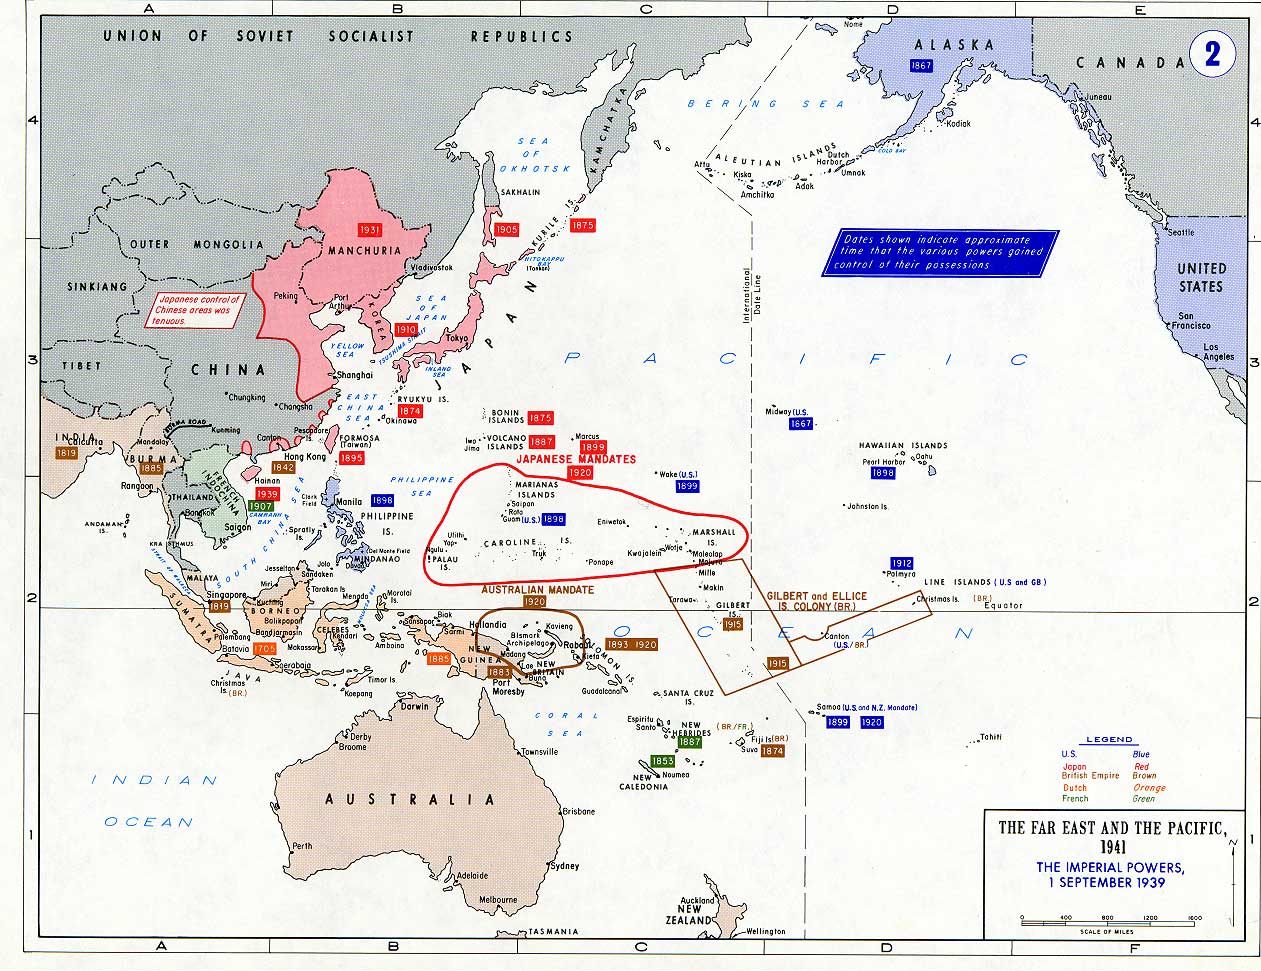 imperial-powers-in-the-far-east-1939.jpg